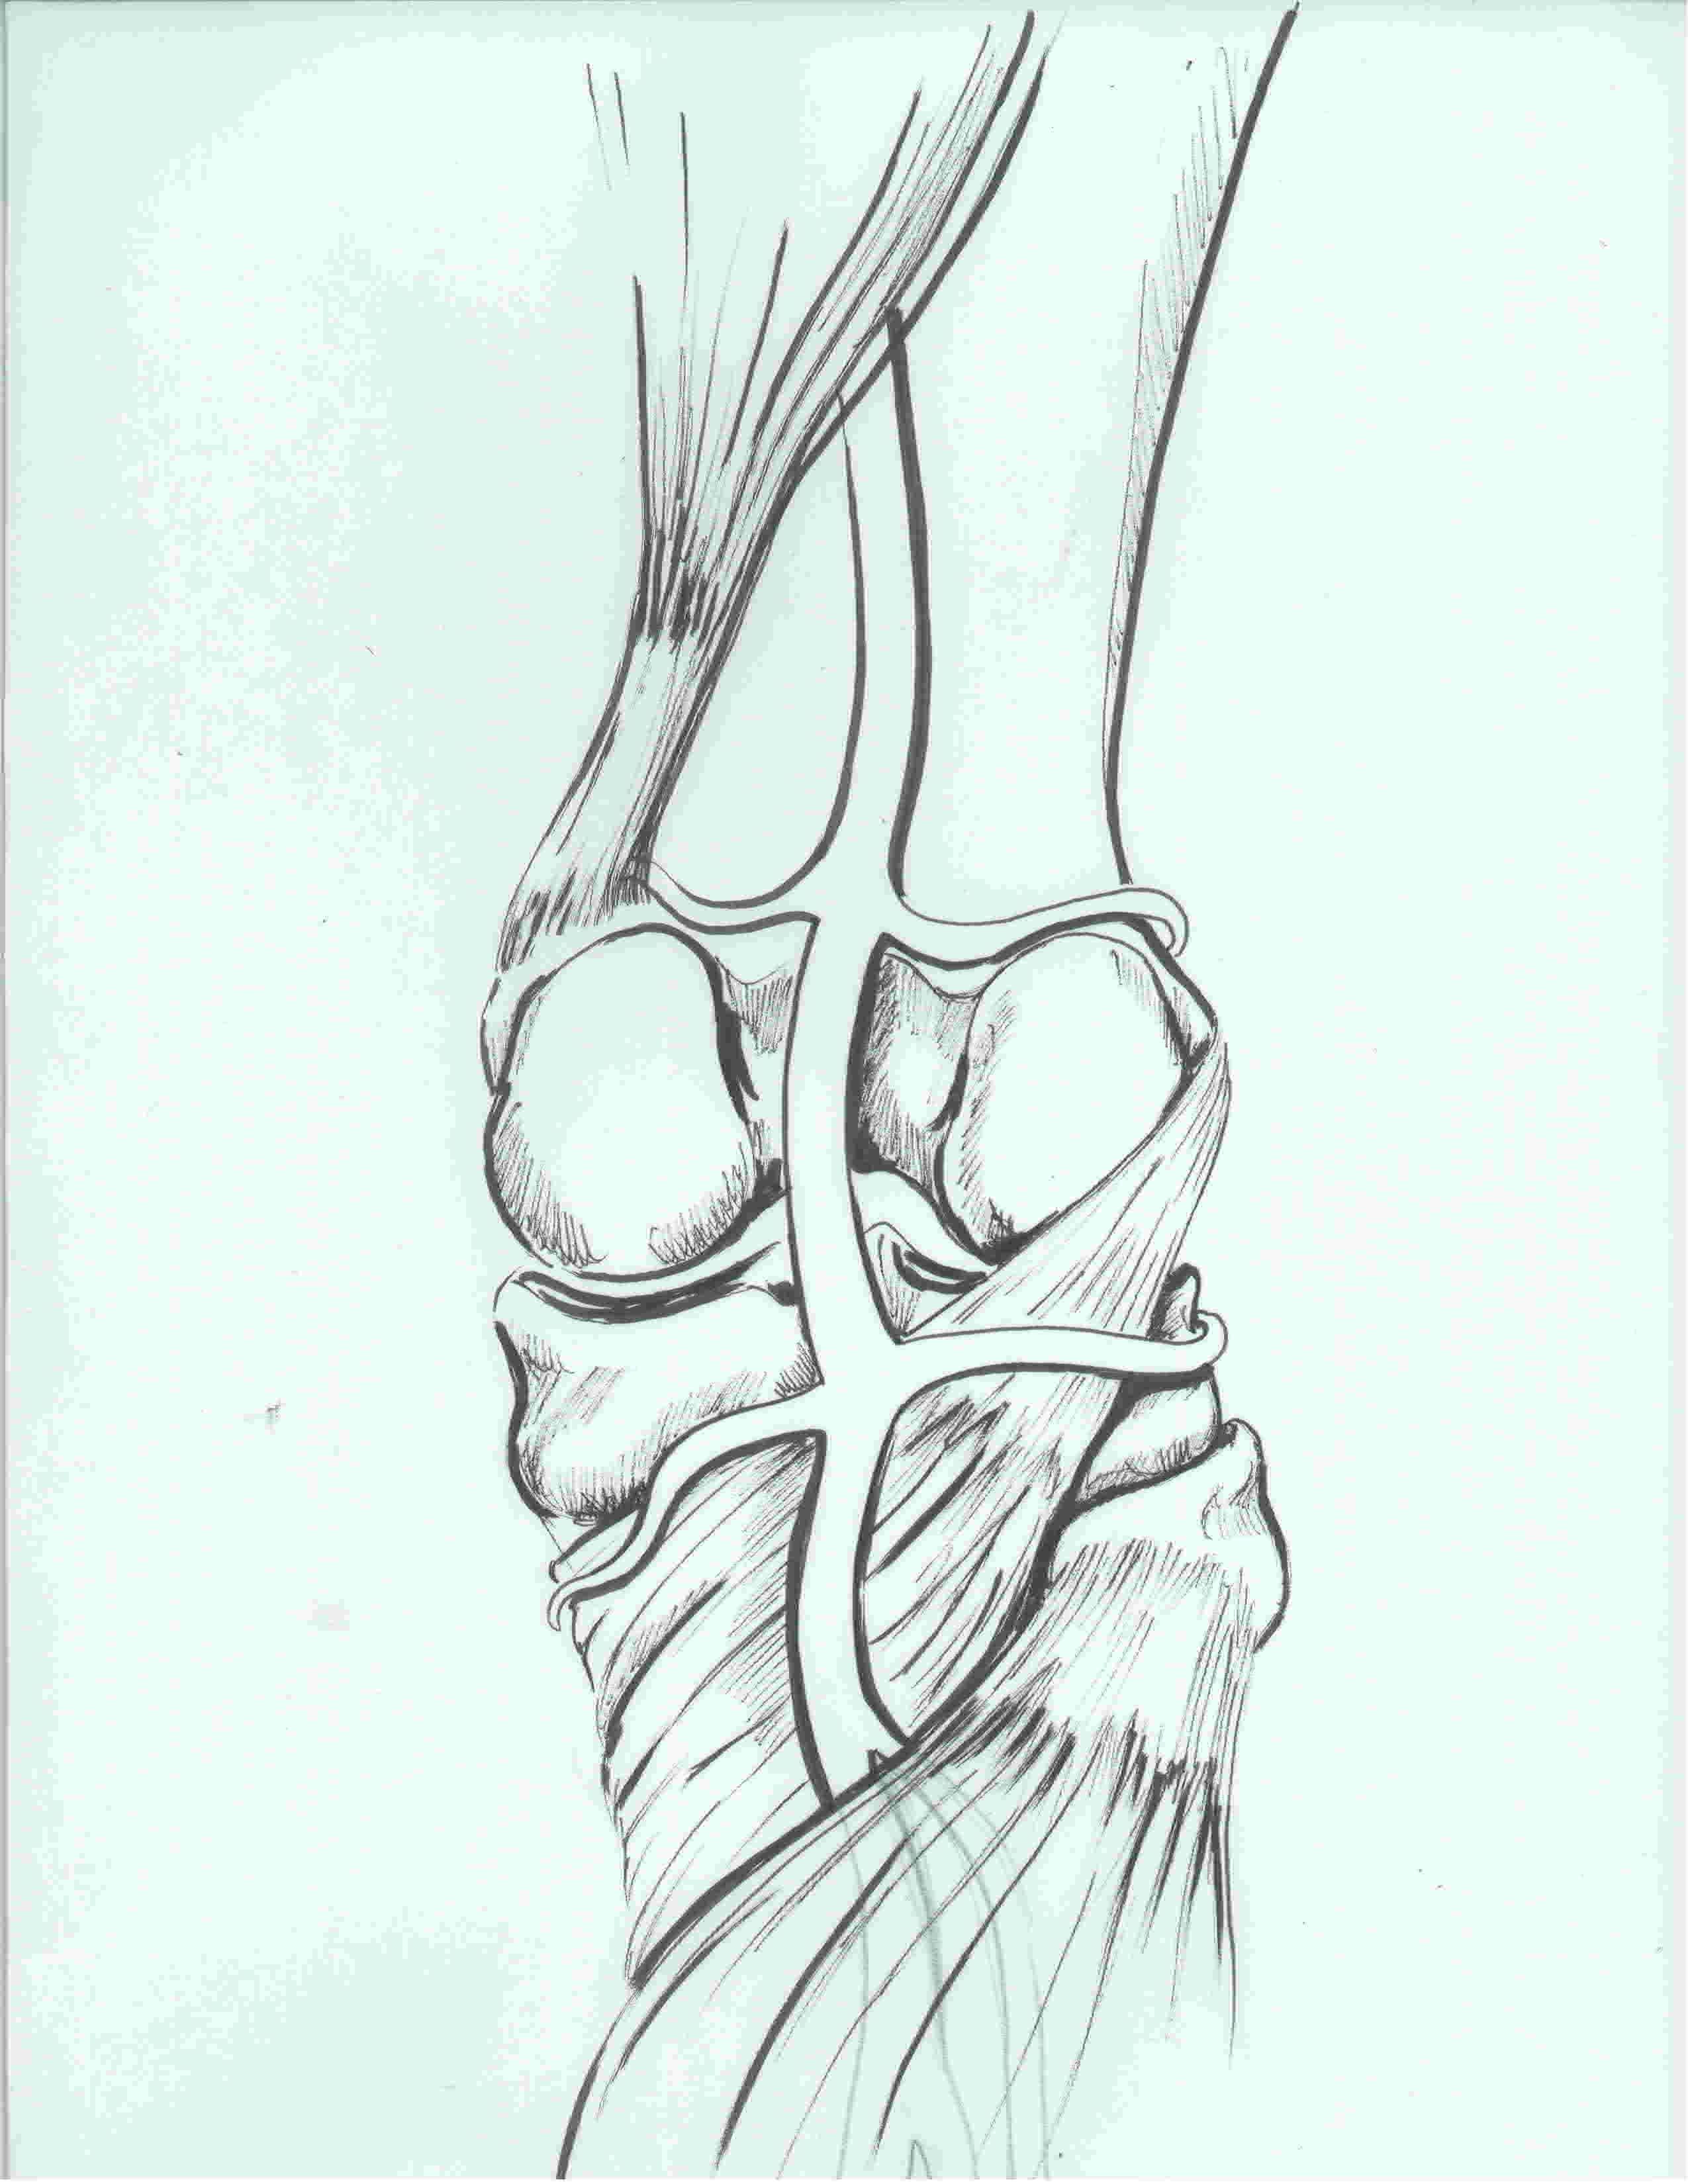 Popliteal arterty illustration